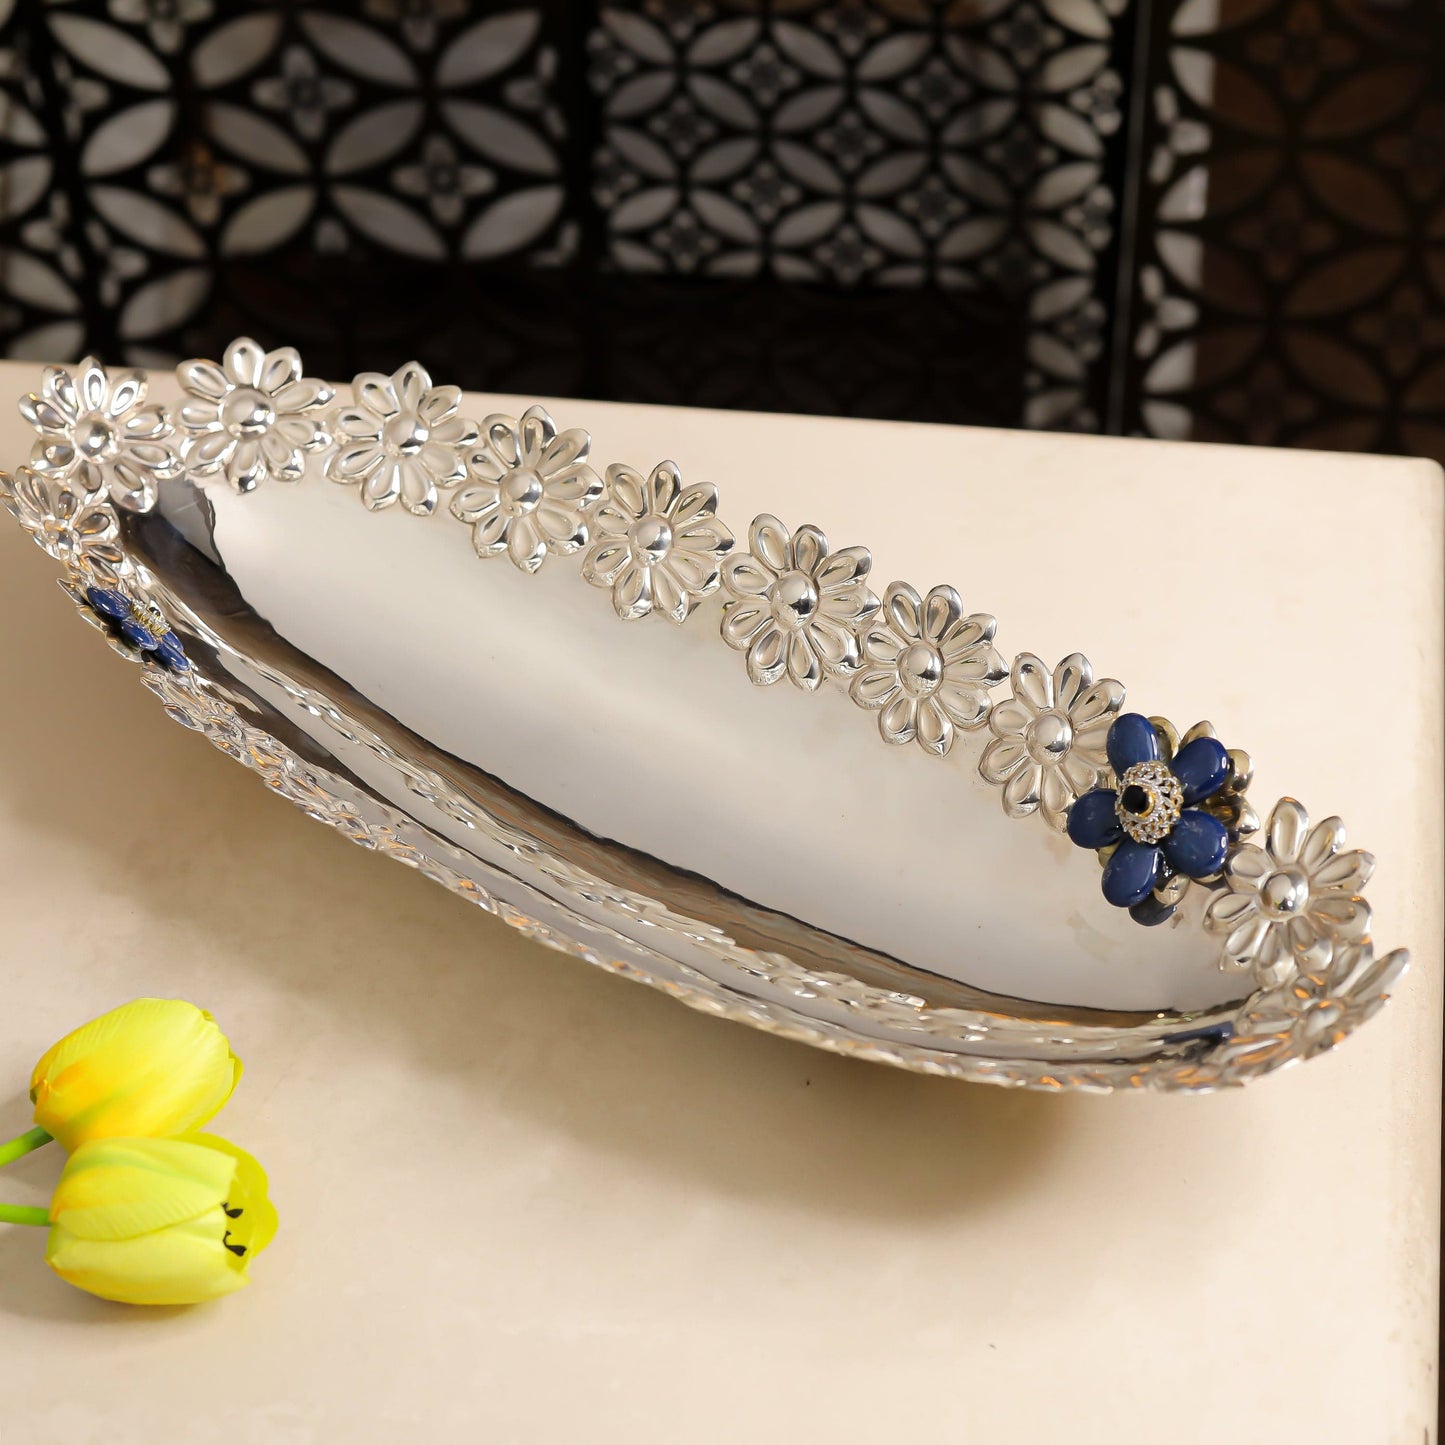 Turvi Floral Design Silver Tray